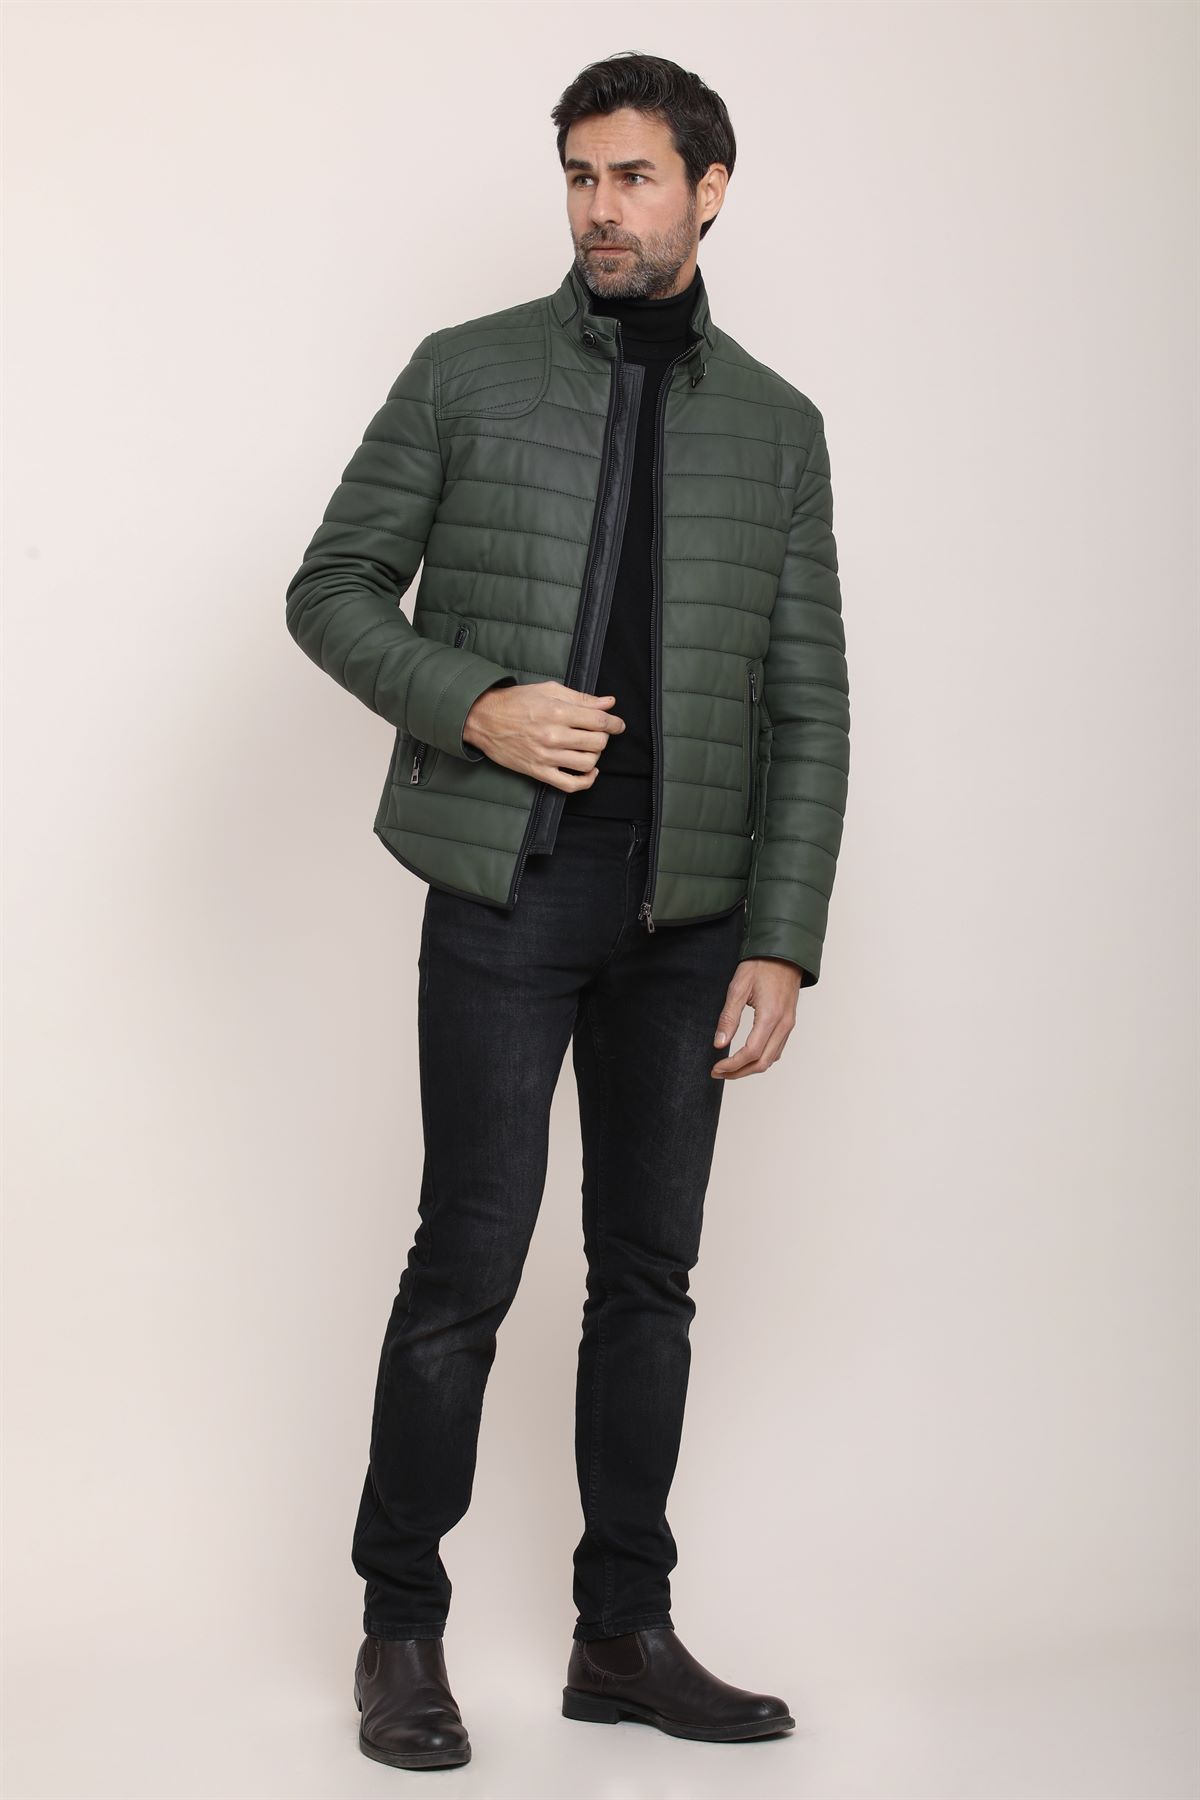 Picture of BestDerei Men's Green Leather Jacket